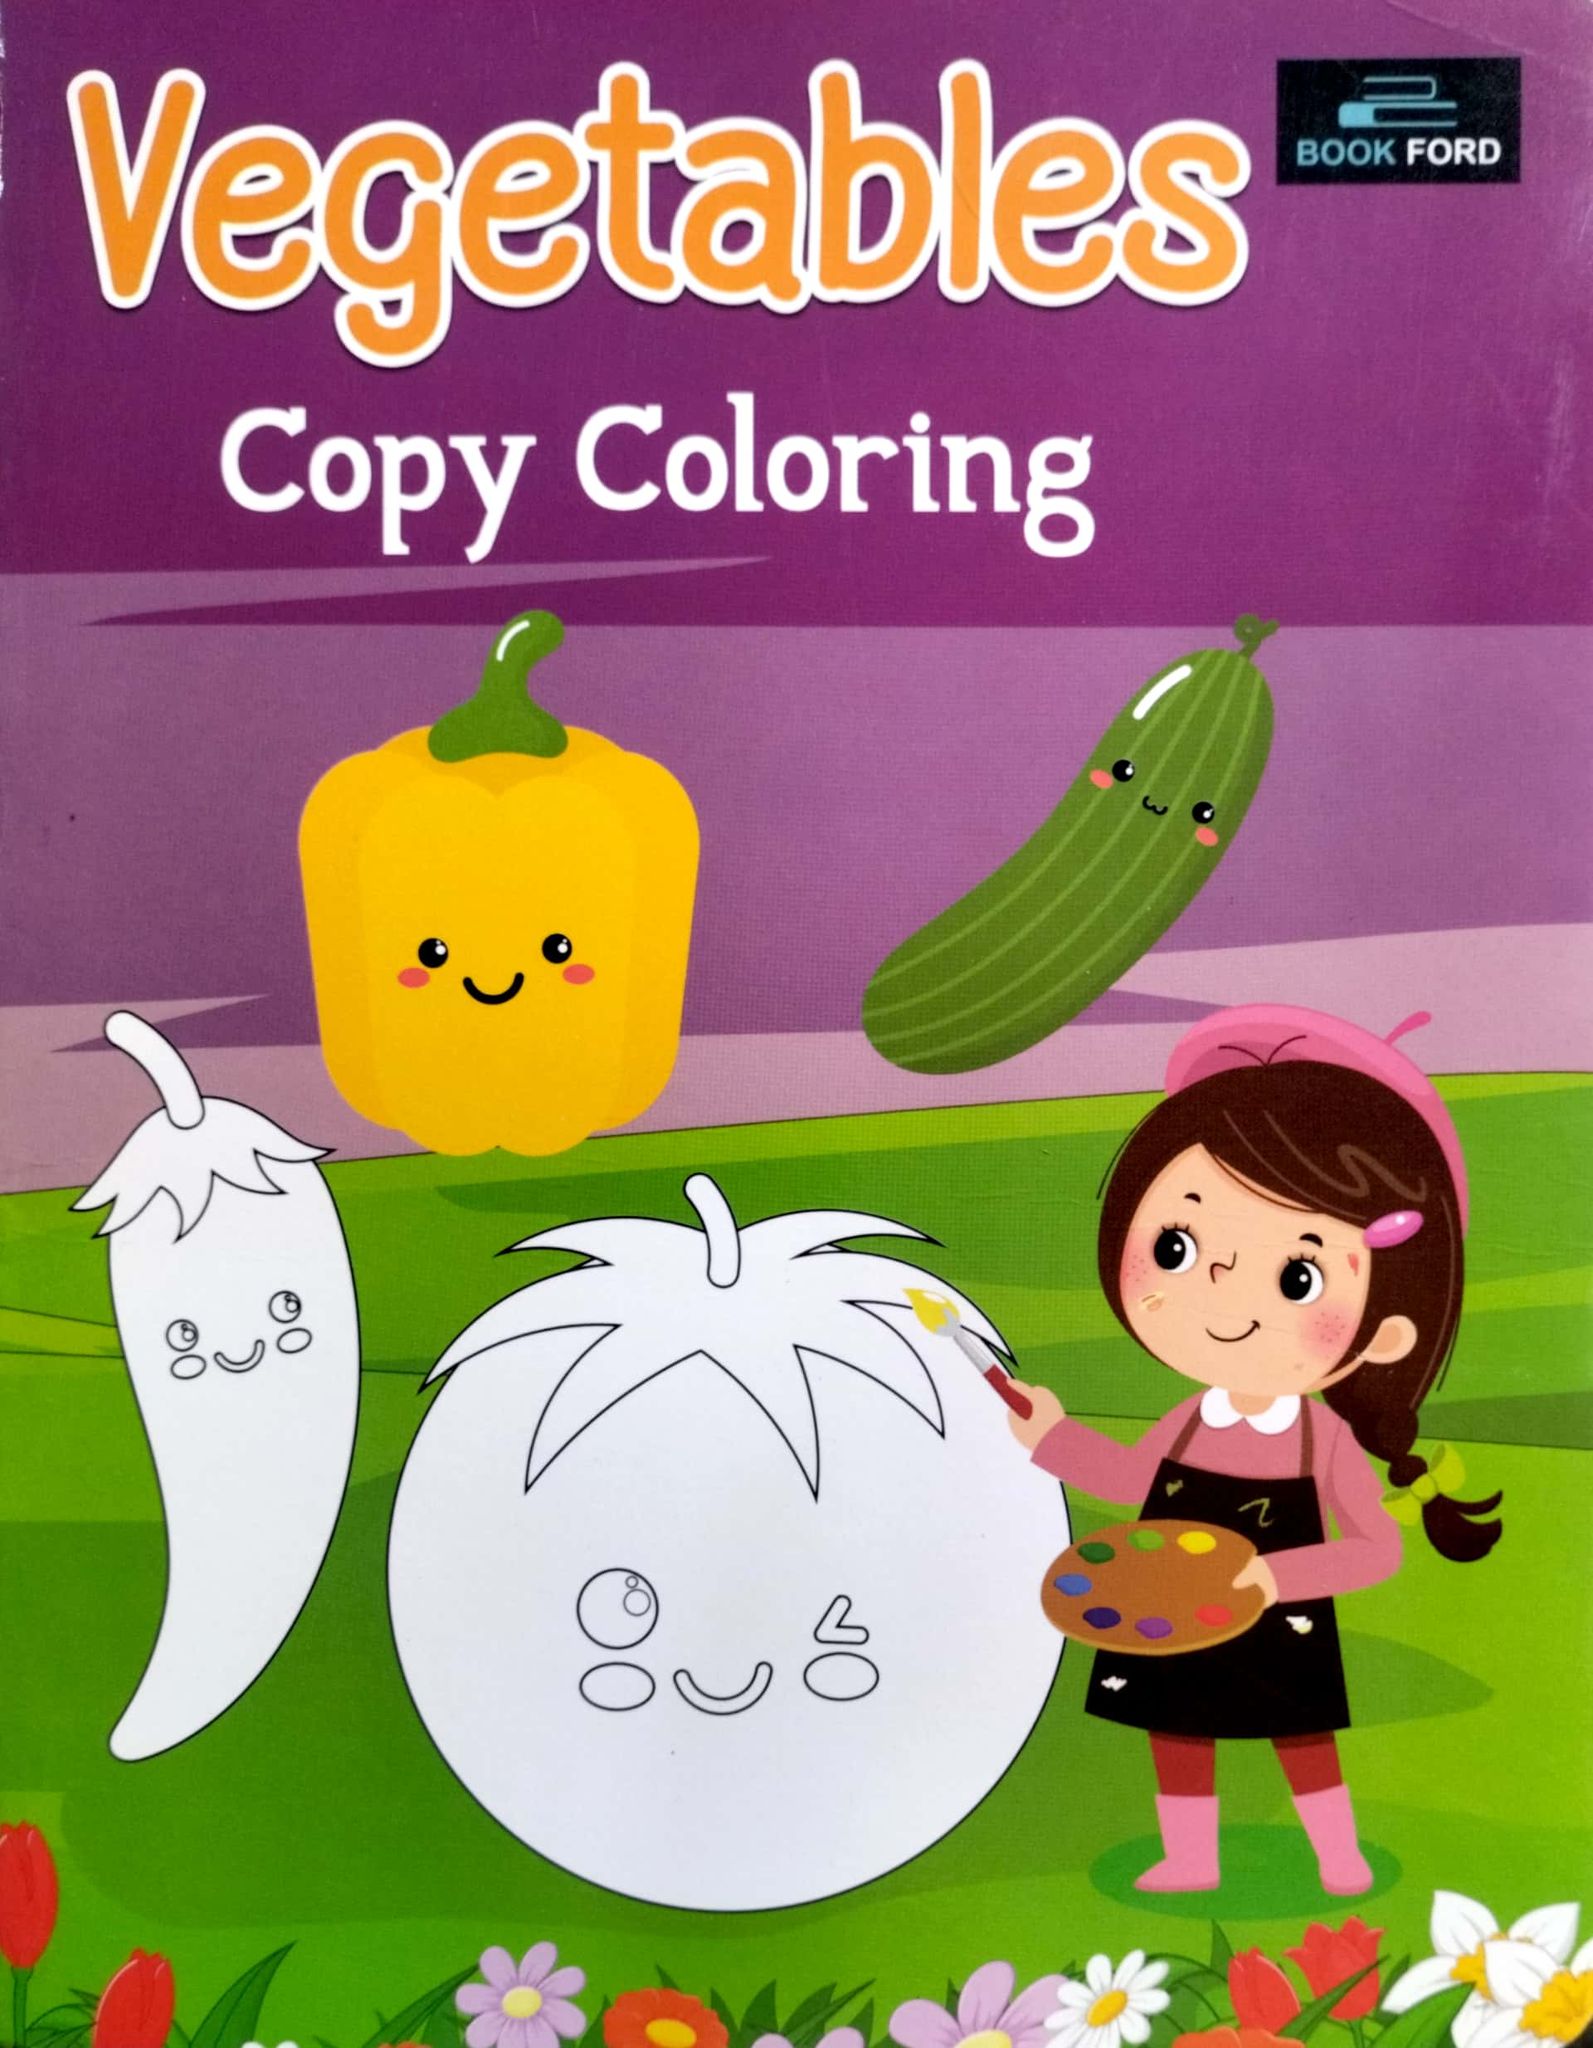 Vegetables Copy Coloring (পেপারব্যাক)